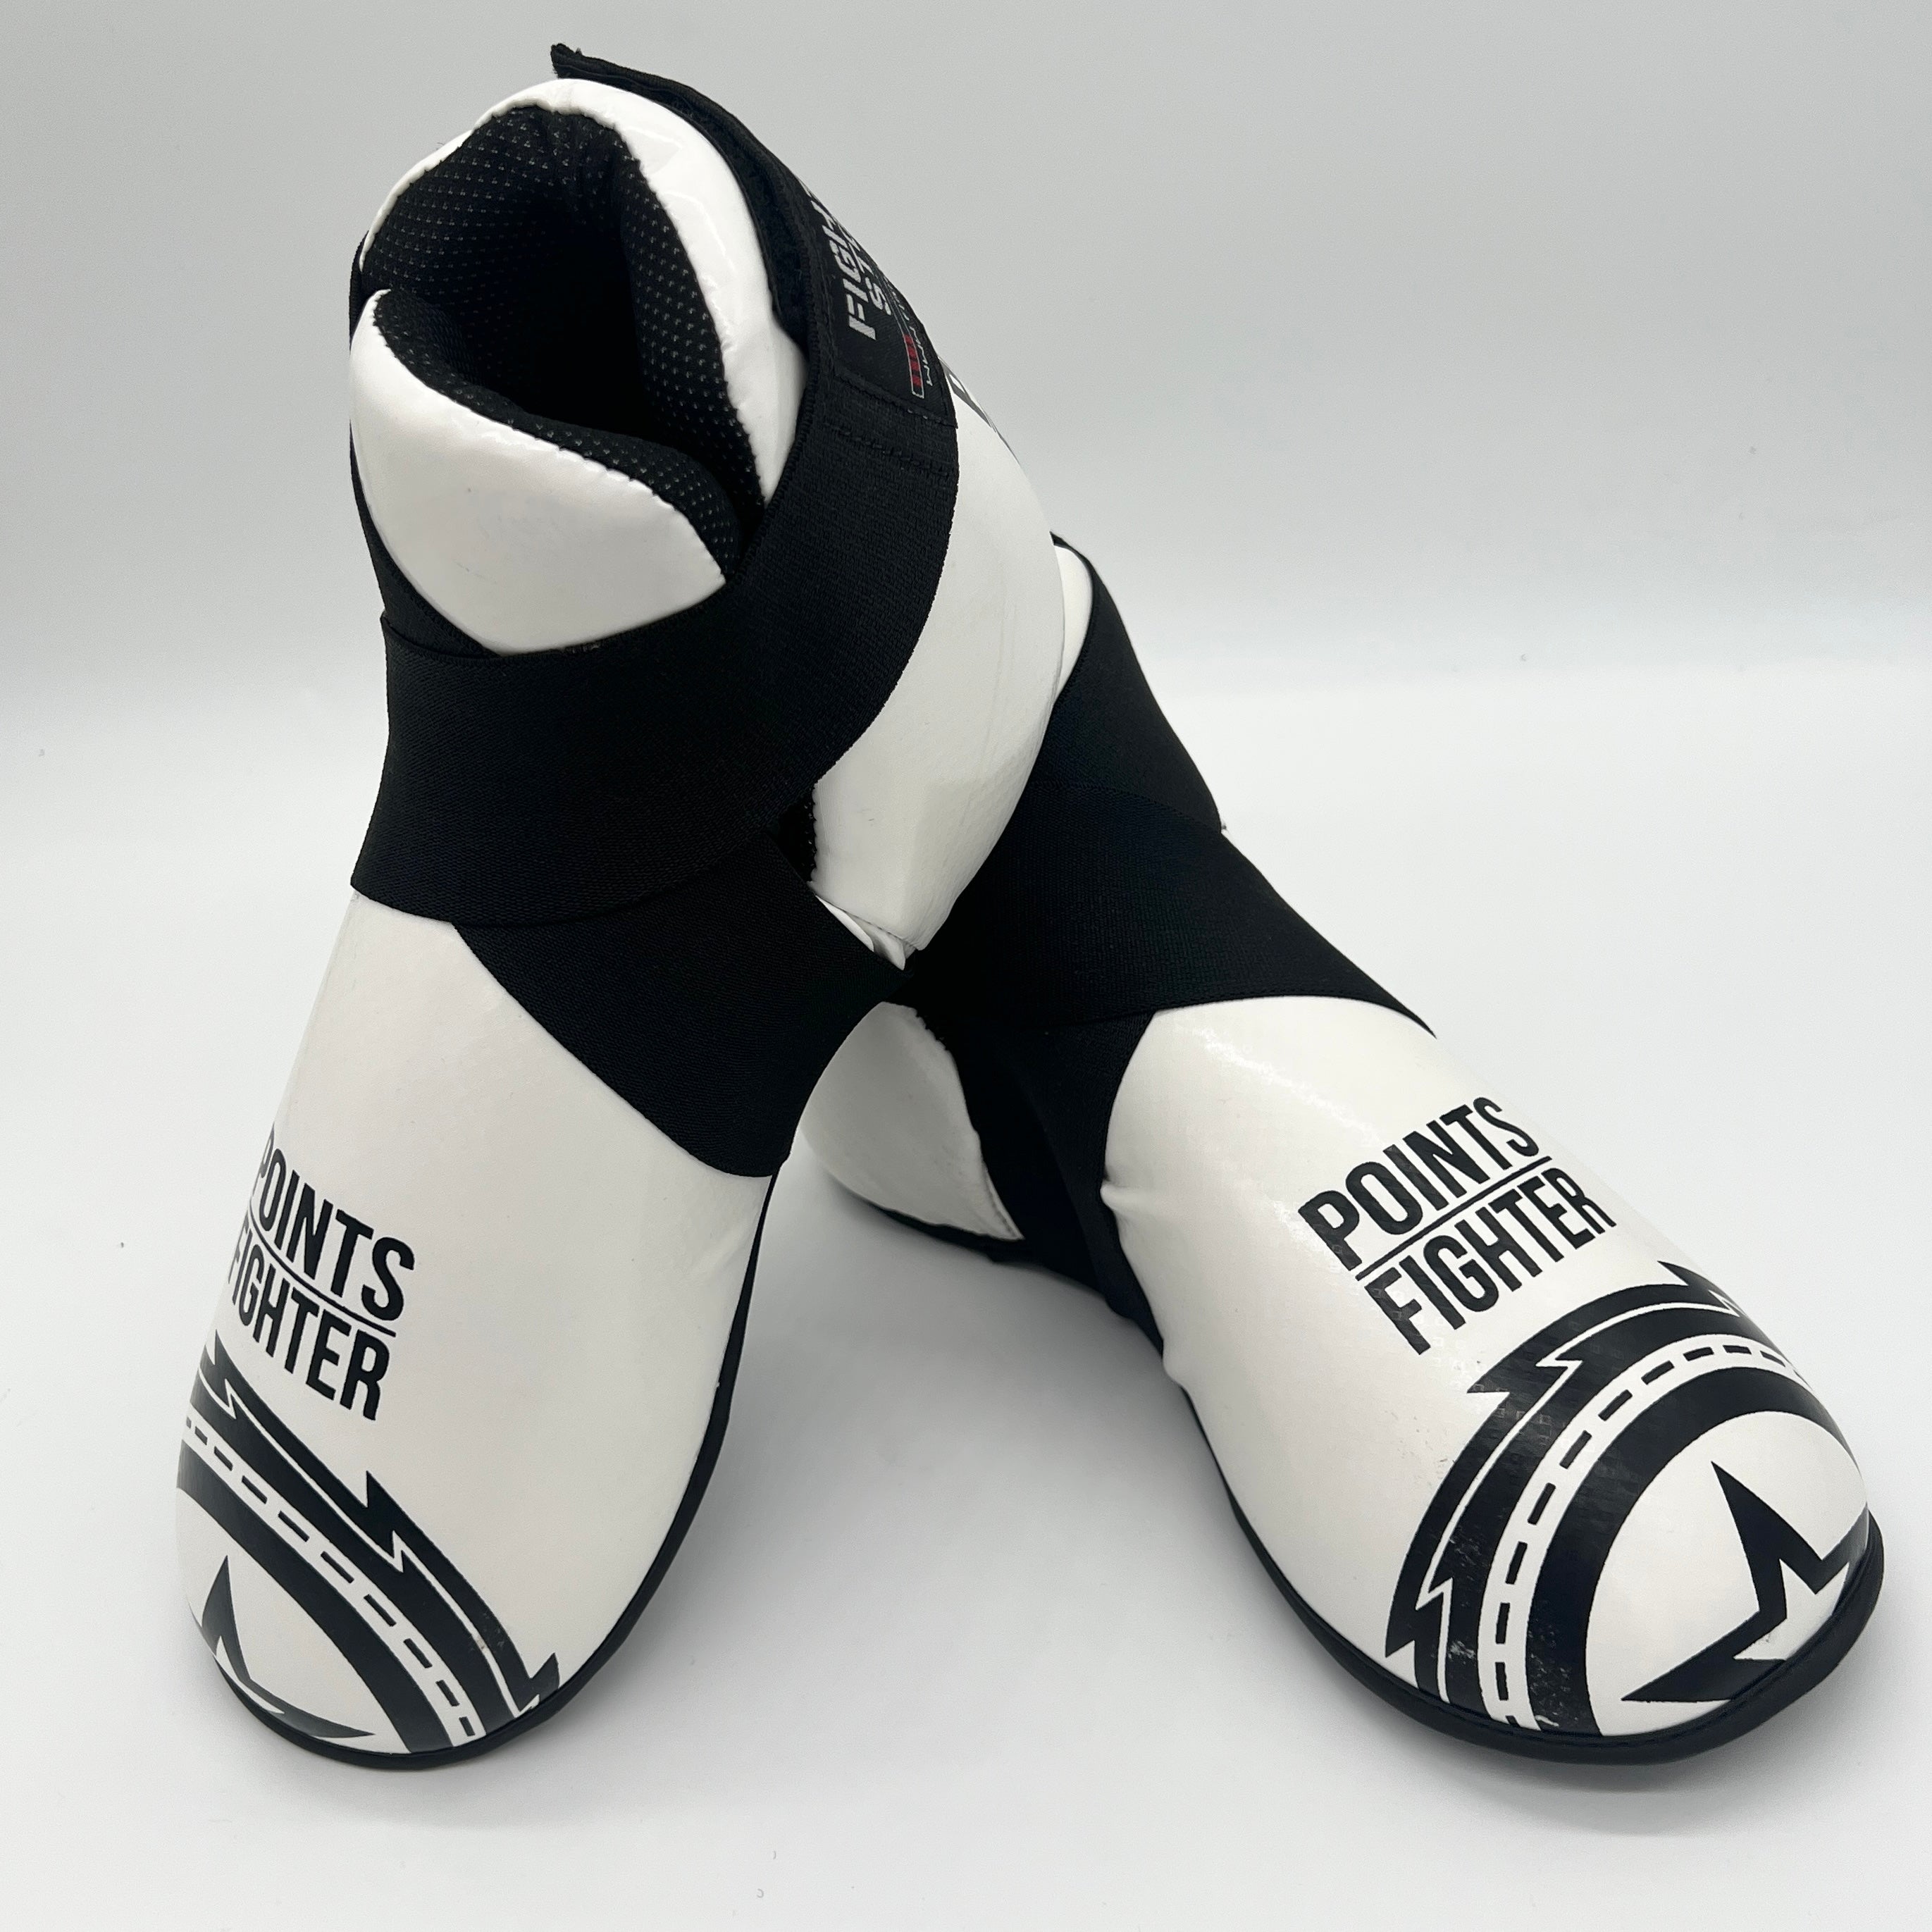 POINTS FIGHTER PRO-2 Super Light Kick Boots